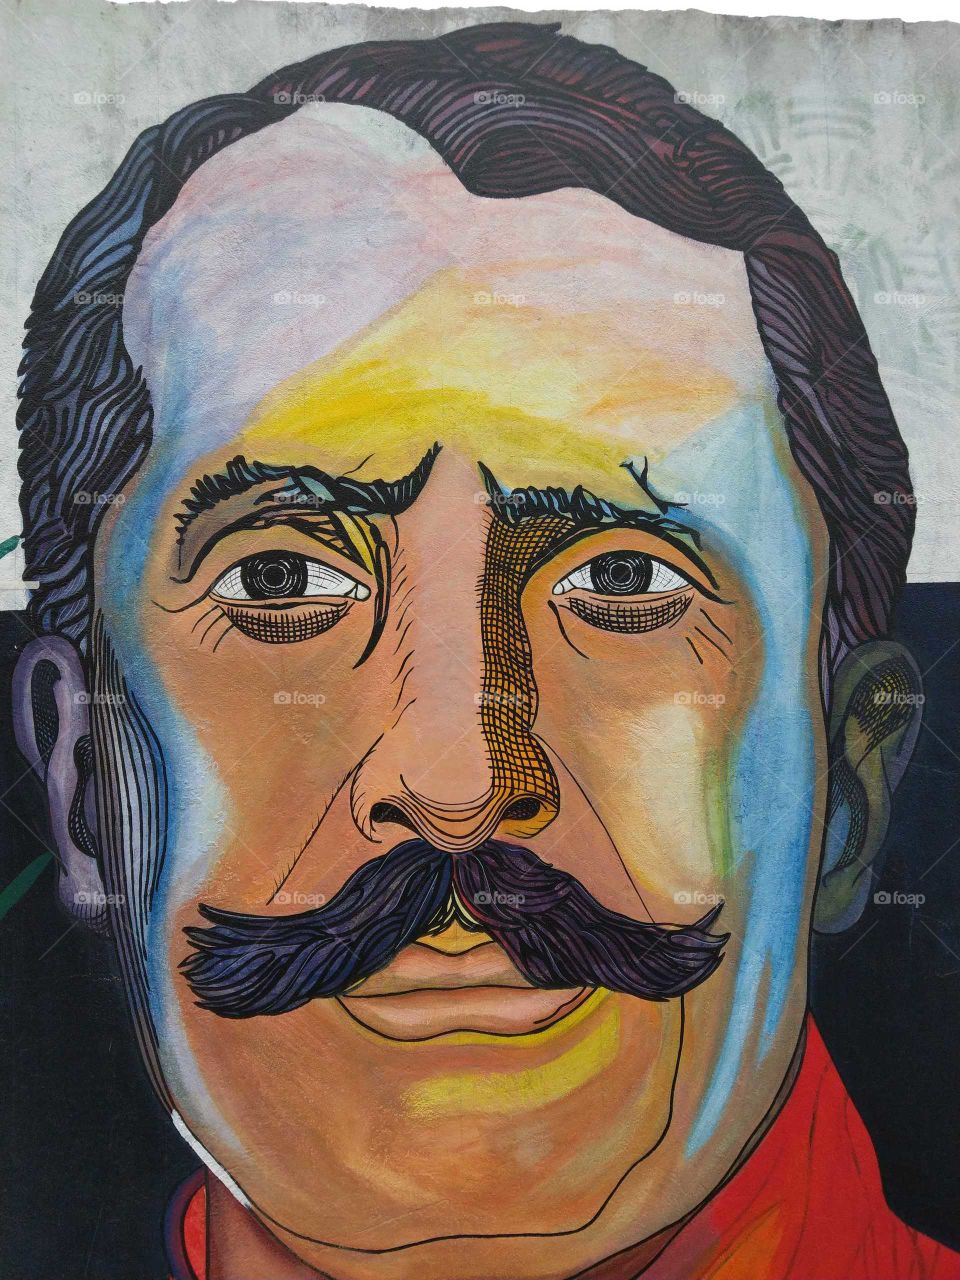 Obra de un artista mexicano 
#Mural #Personaje #History #Mexico #Tradicion #Artista #Revolucion